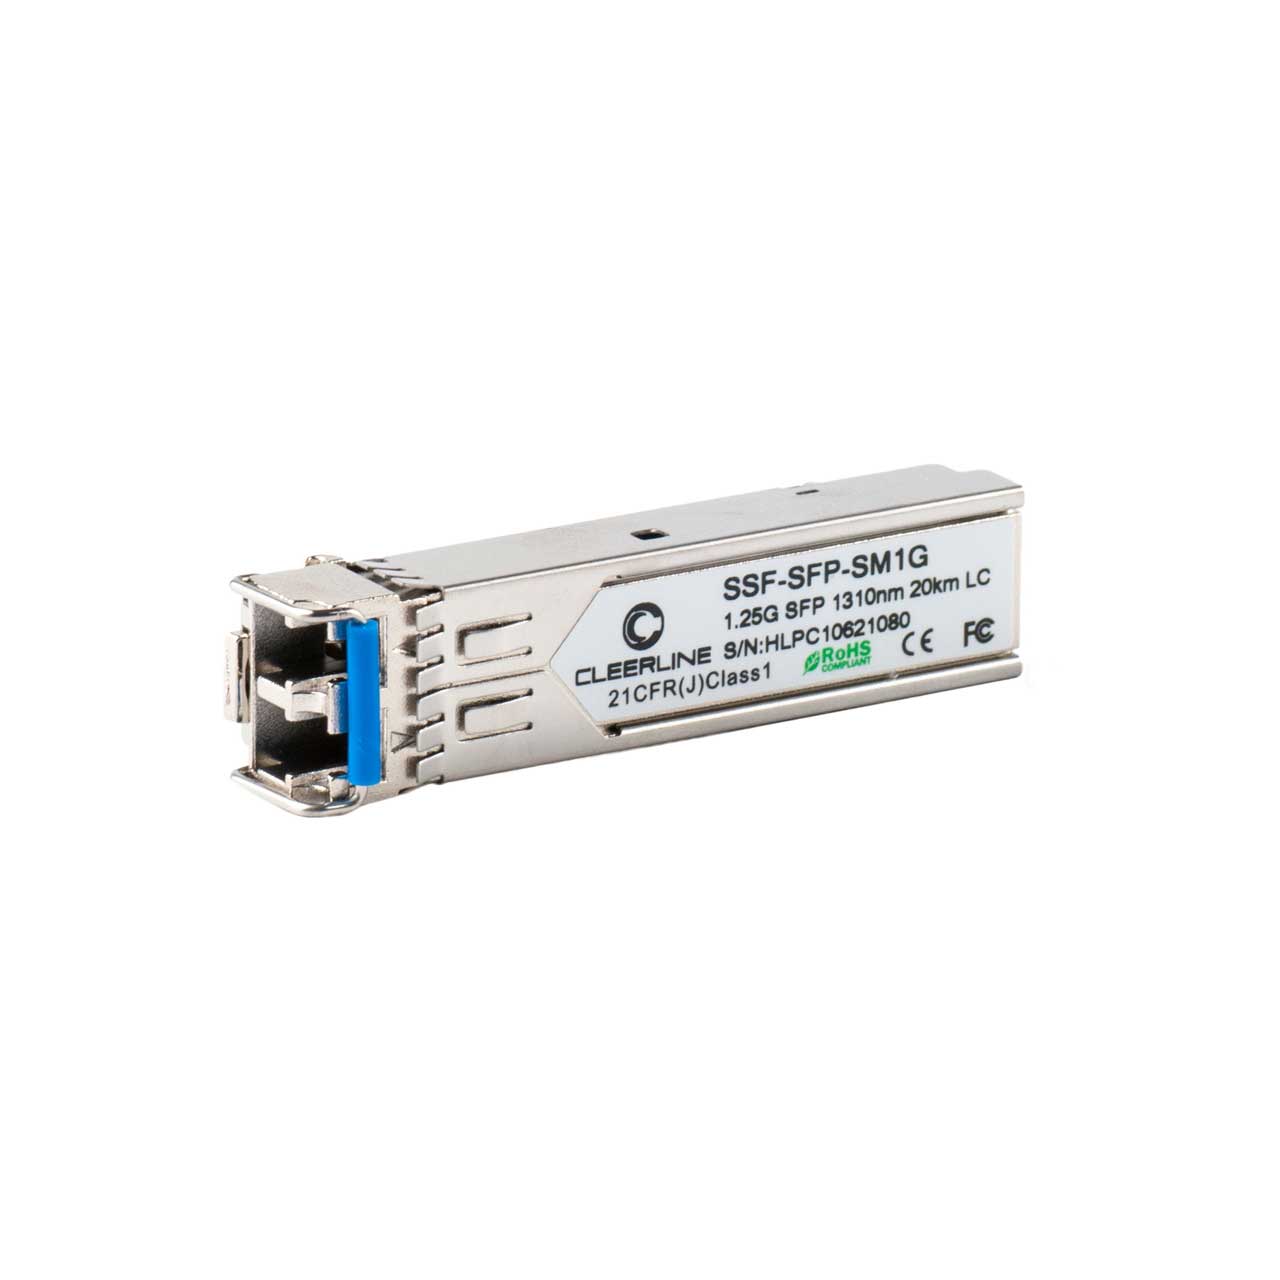 Cleerline SSF-SFP-SM1G 1.25G SFP Transceiver SM/LC 1000Base-LX - 1310nm - 20Km Max Reach - with DDM SSF-SFP-SM1G